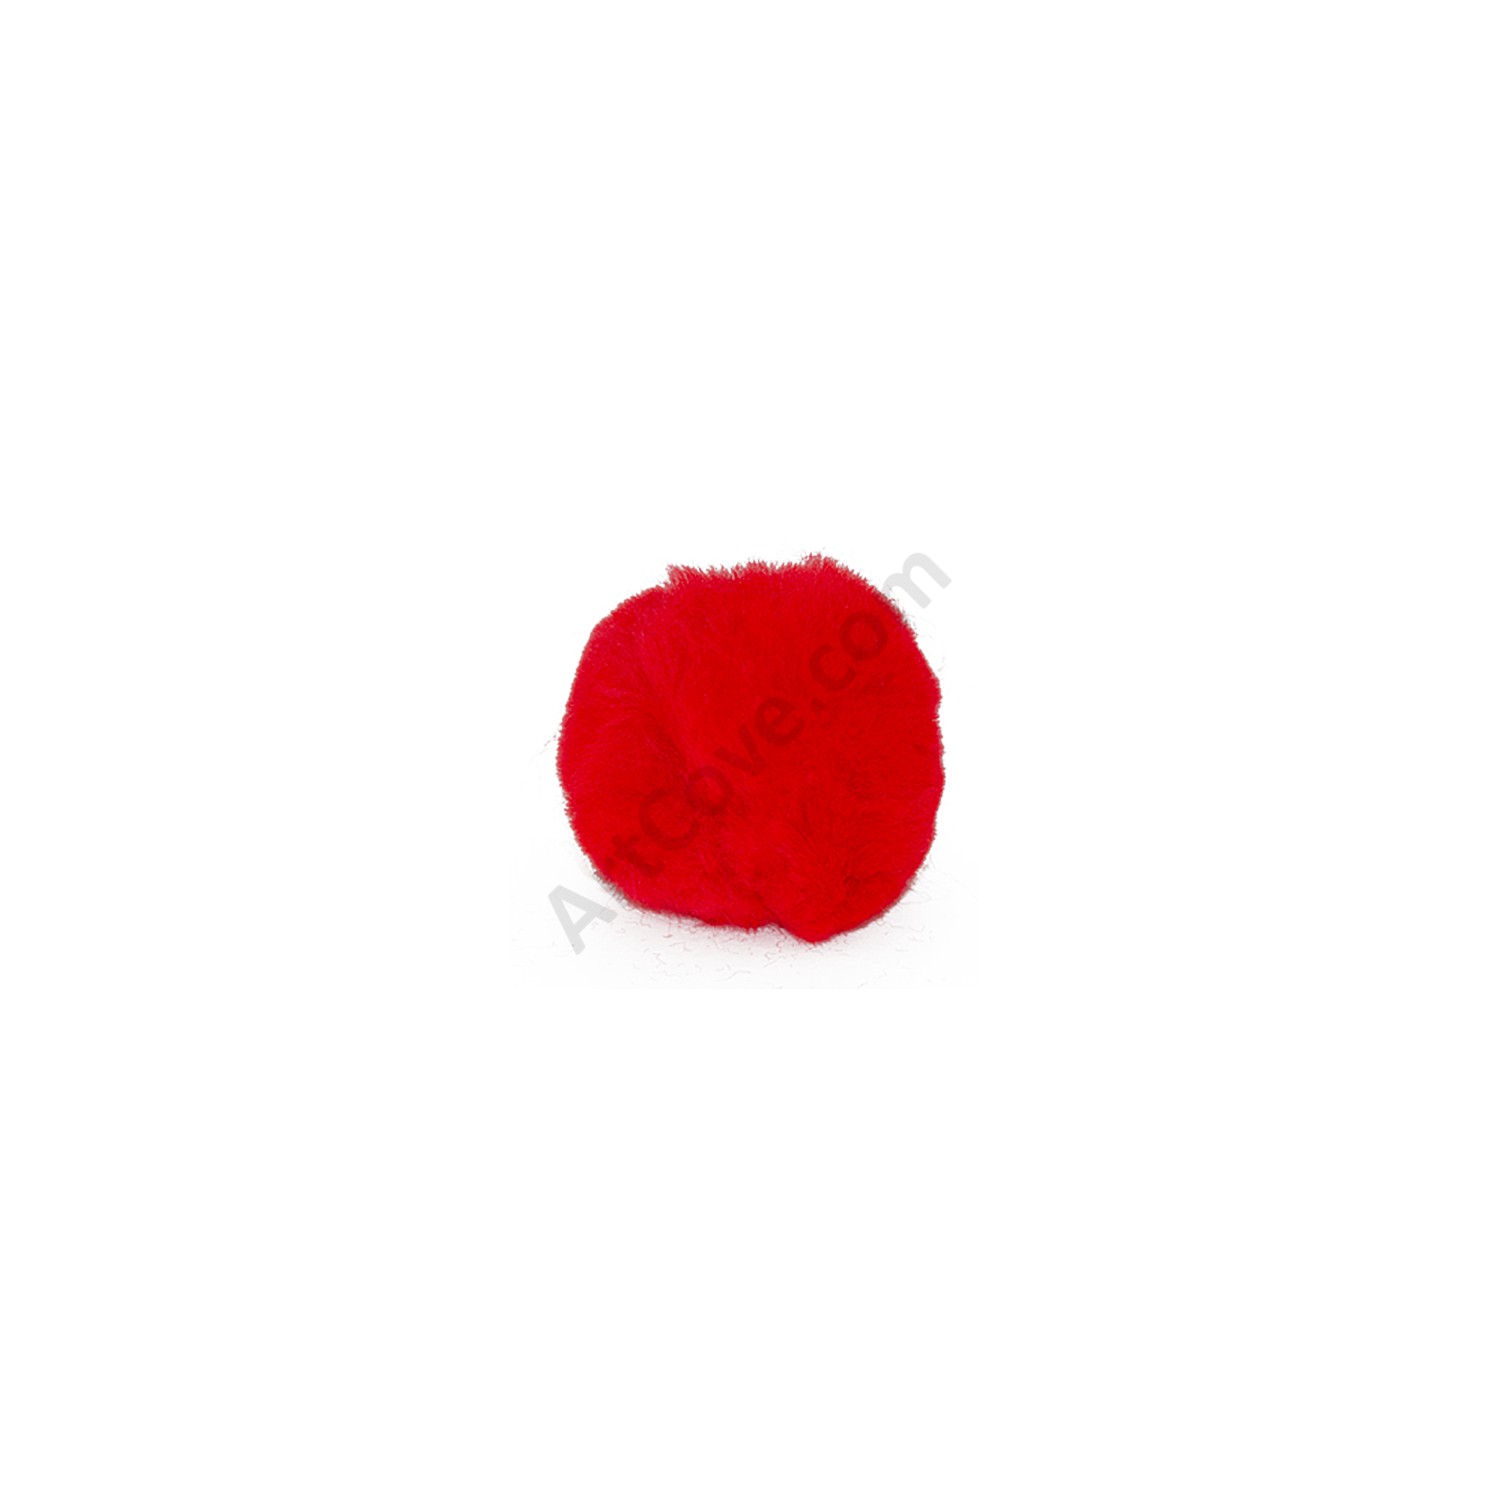 1-1/2 inch Red Craft Pom Poms 50 Pieces Pom Pom Balls